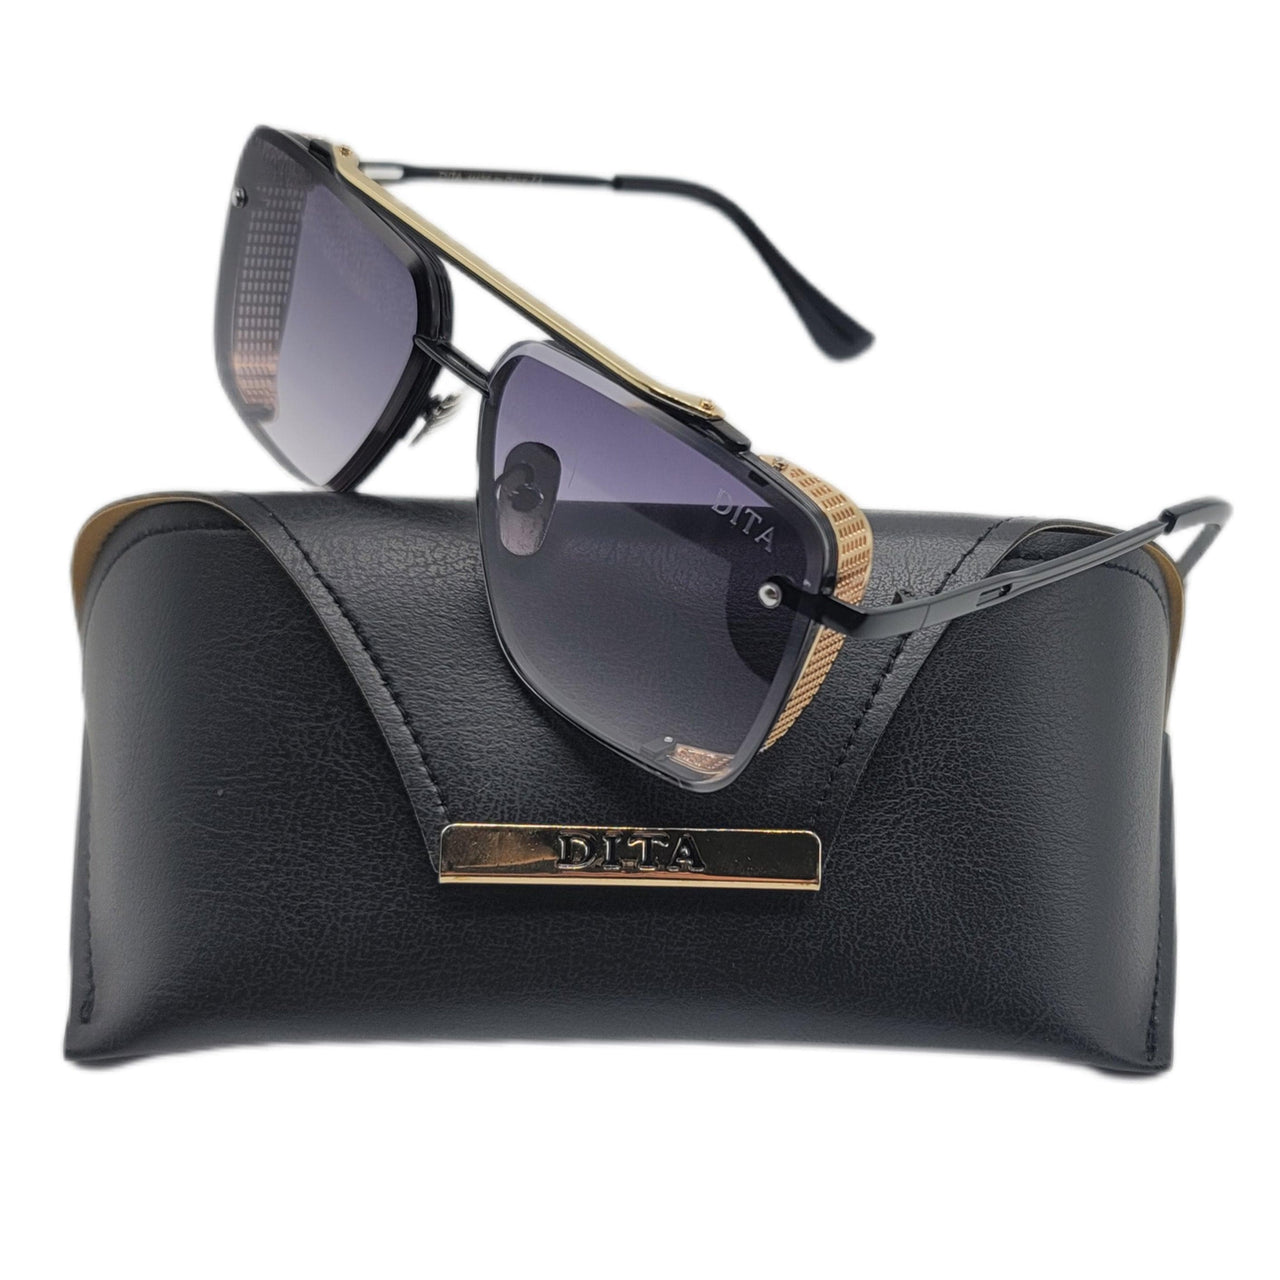 The Bag Couture Sunglasses DITA MACH 6 Sunglasses GBL